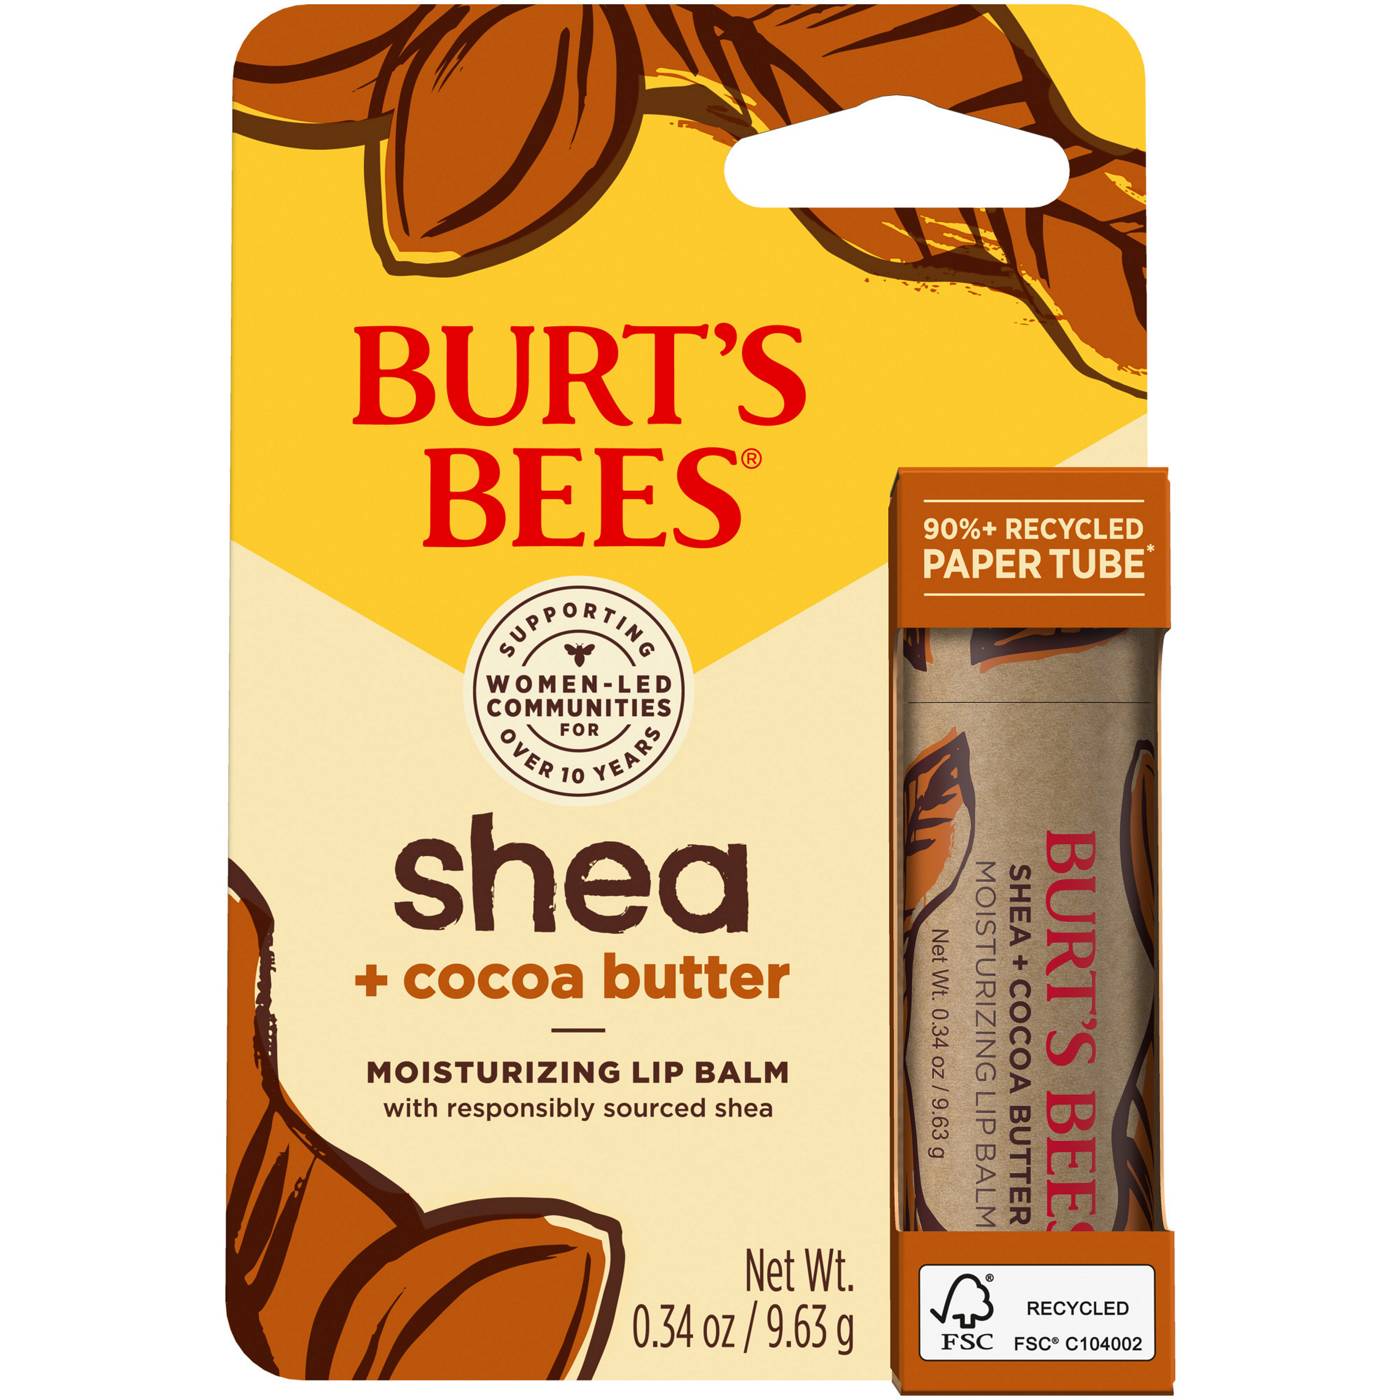 Burt's Bees Shea + Cocoa Butter Moisturizing Lip Balm; image 1 of 8